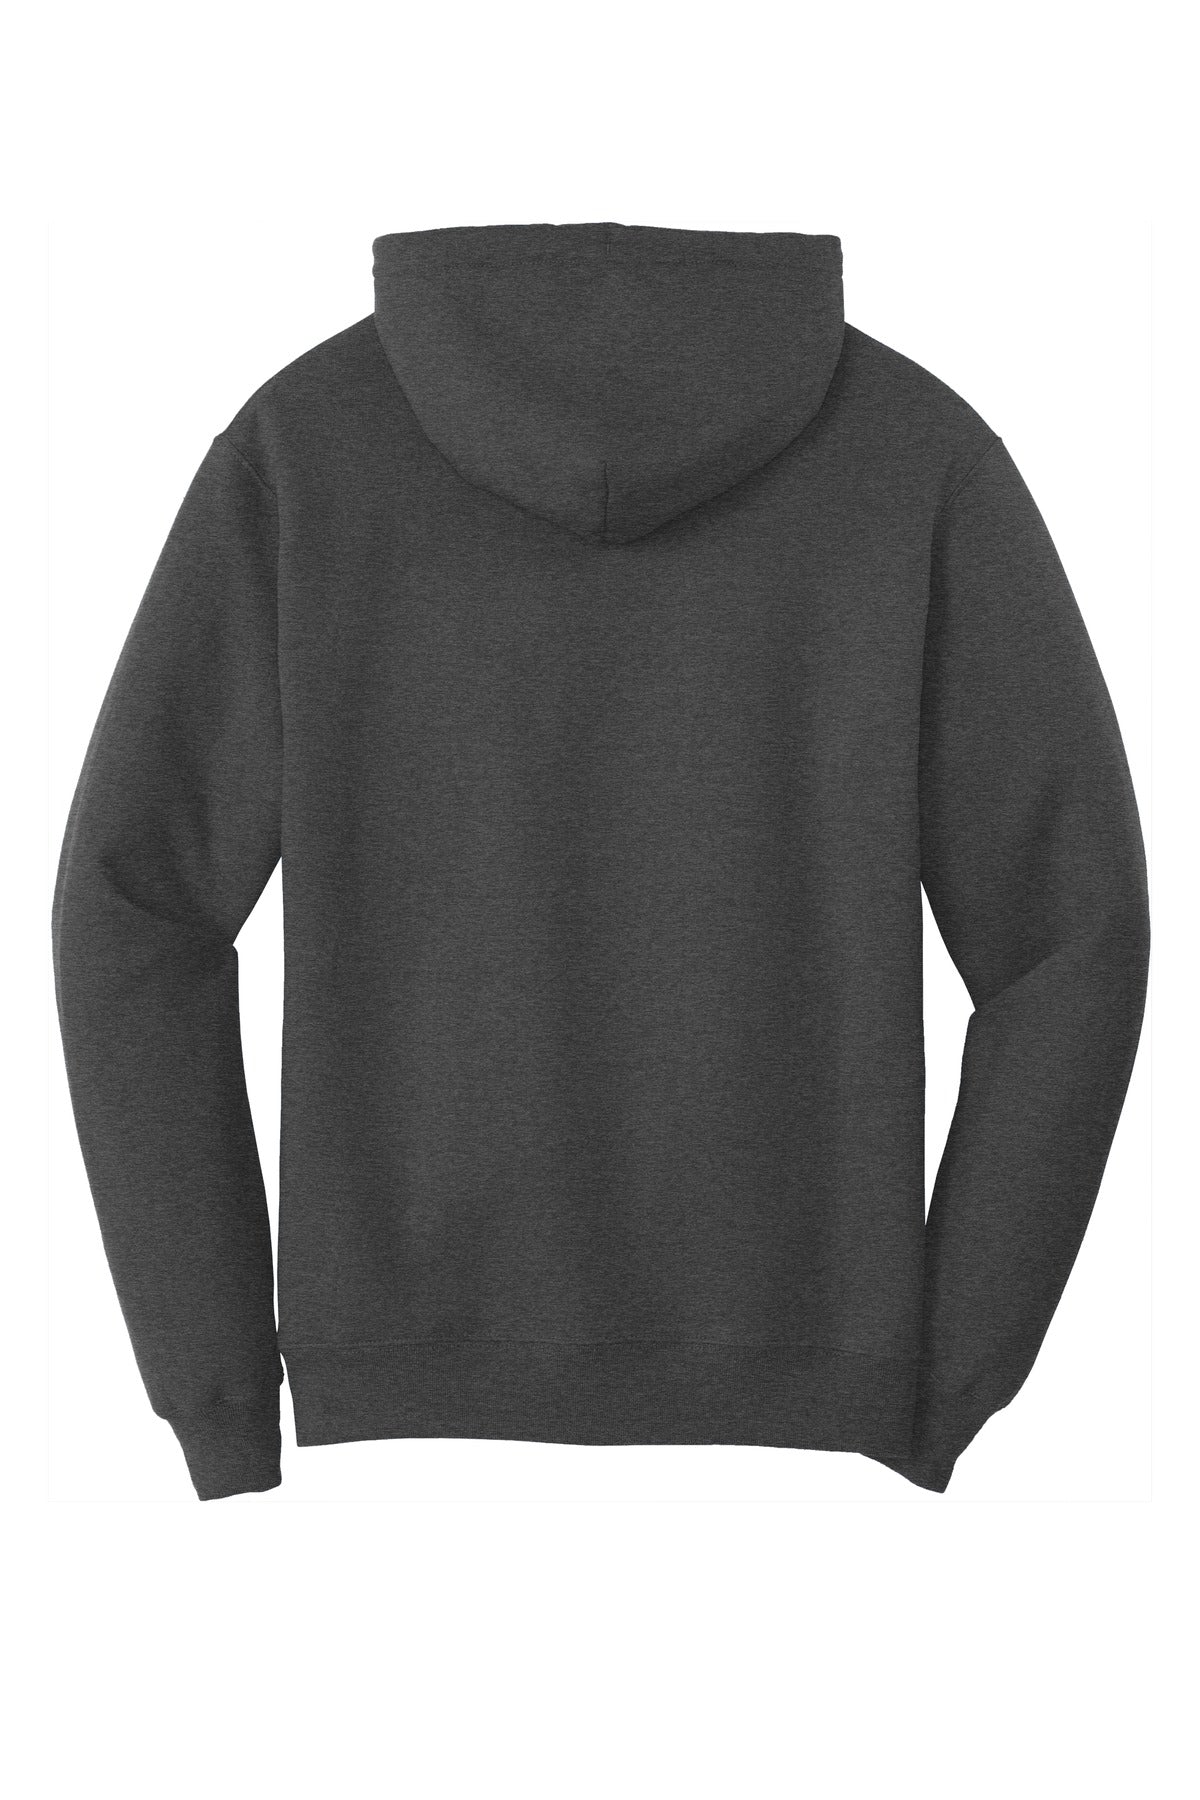 Port & Company - Core Fleece Pullover Hooded Sweatshirt. PC78H - Dark Heather Grey